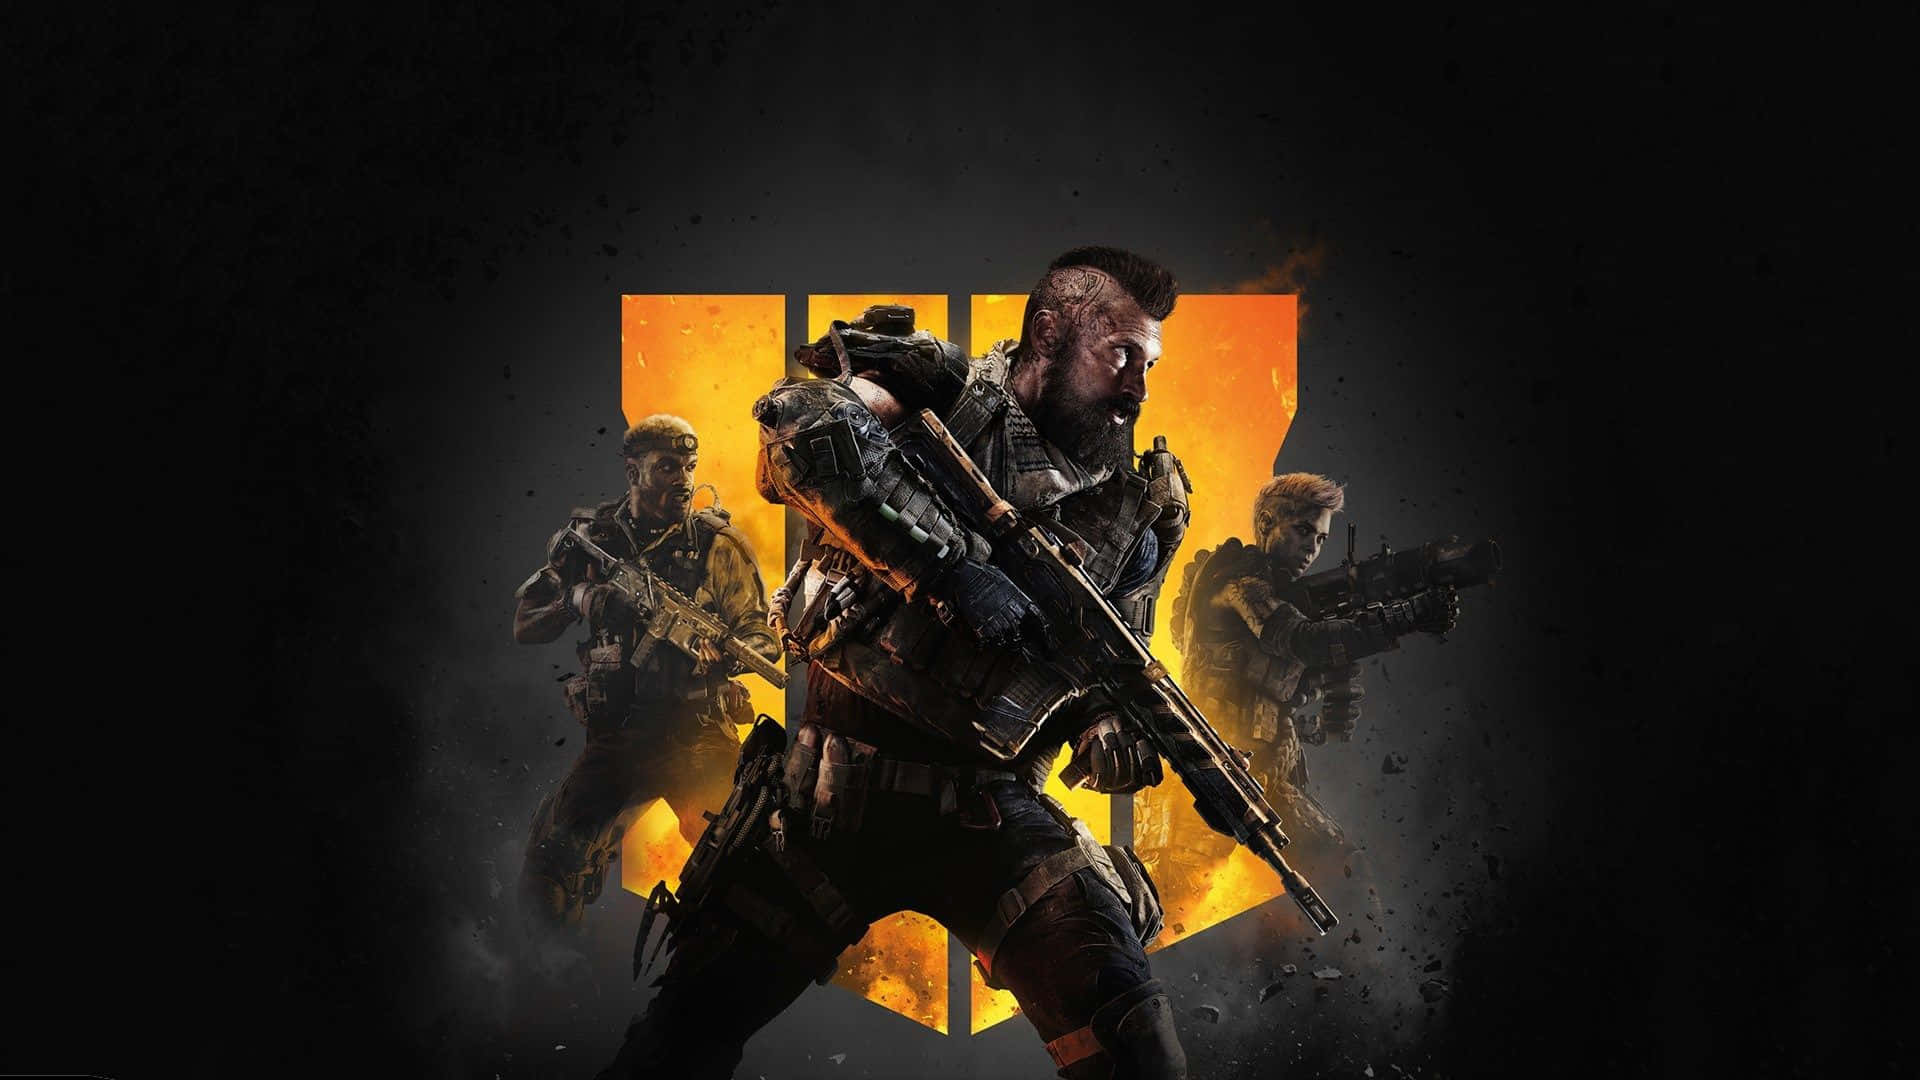 4kultra Hd Gaming: Call Of Duty: Black Ops 4 Wallpaper